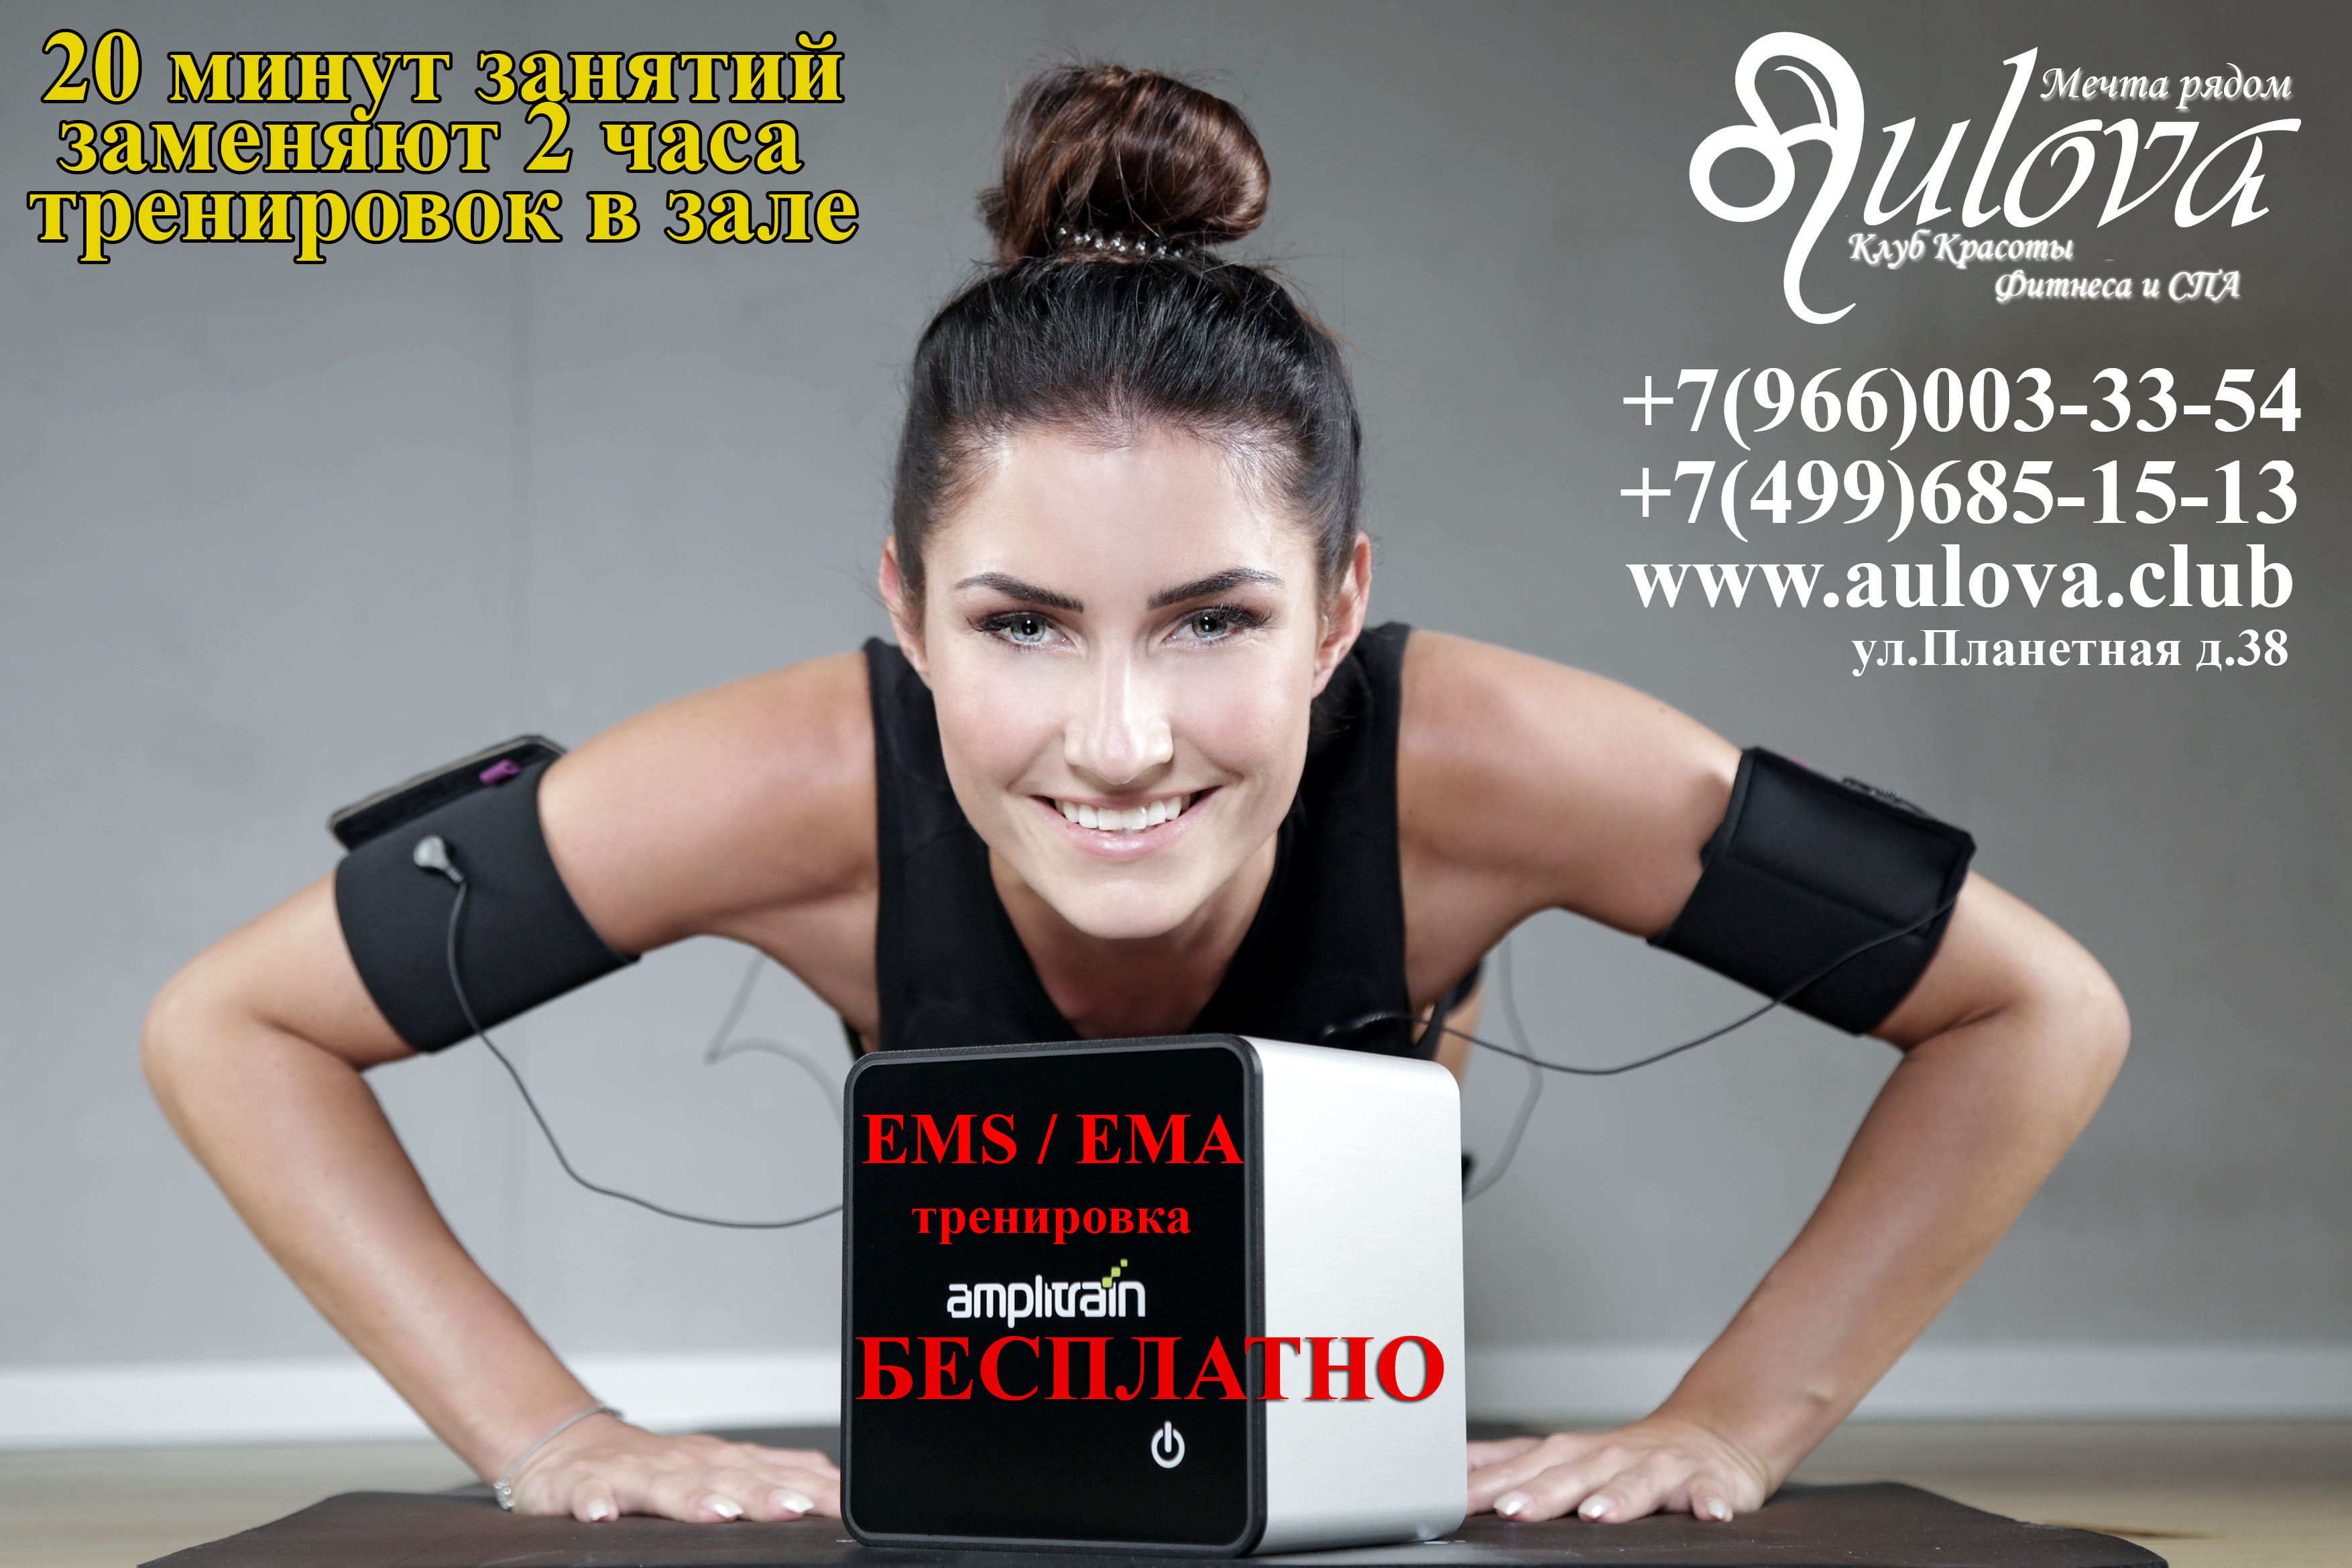 Aulova
Клуб красоты и фитнеса